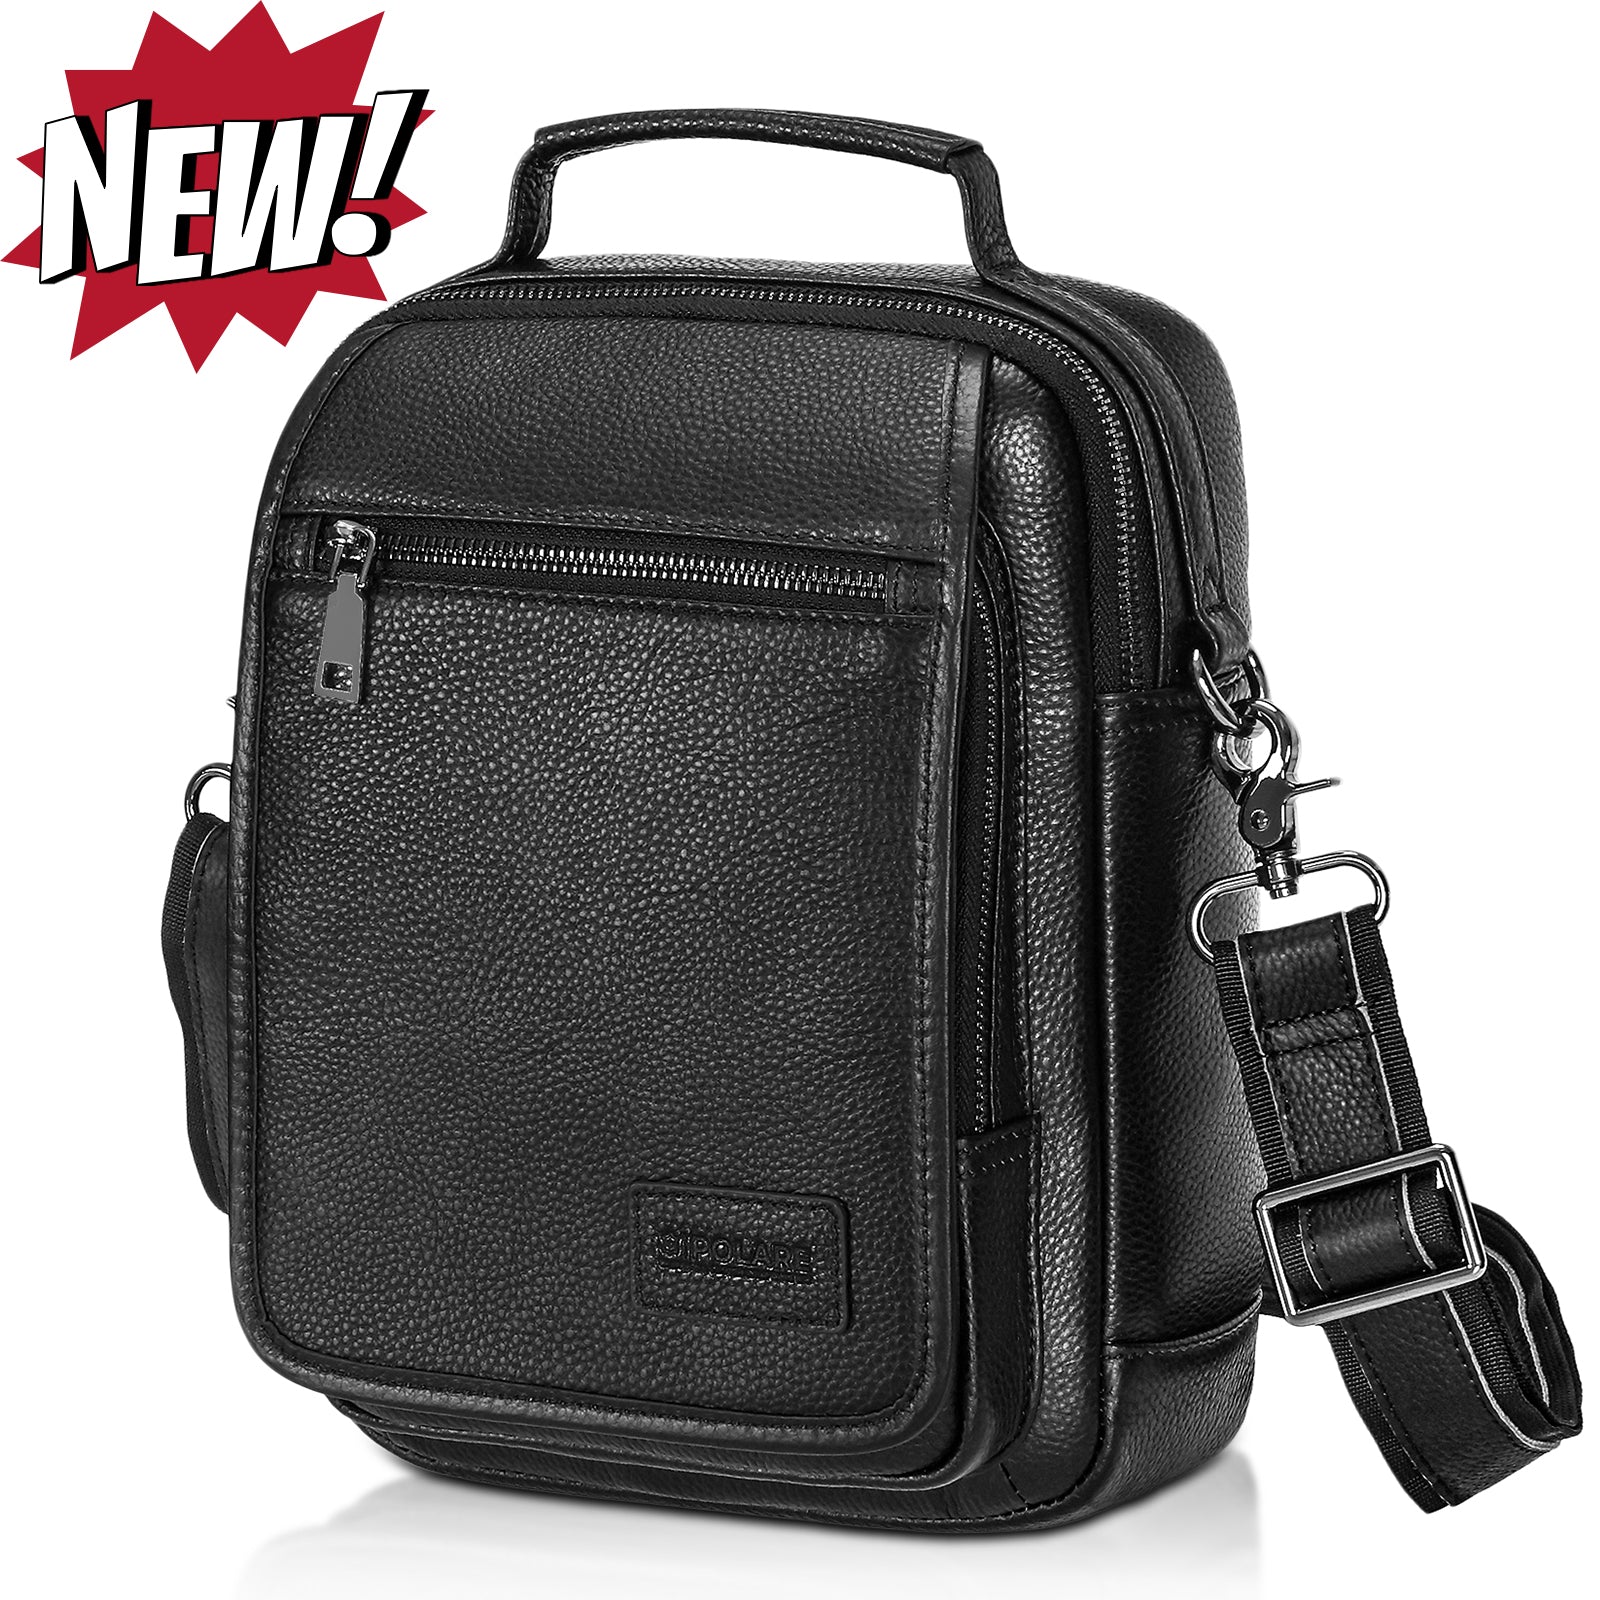 Italian Leather Messenger Bag Waterproof Travel Shoulder Bag